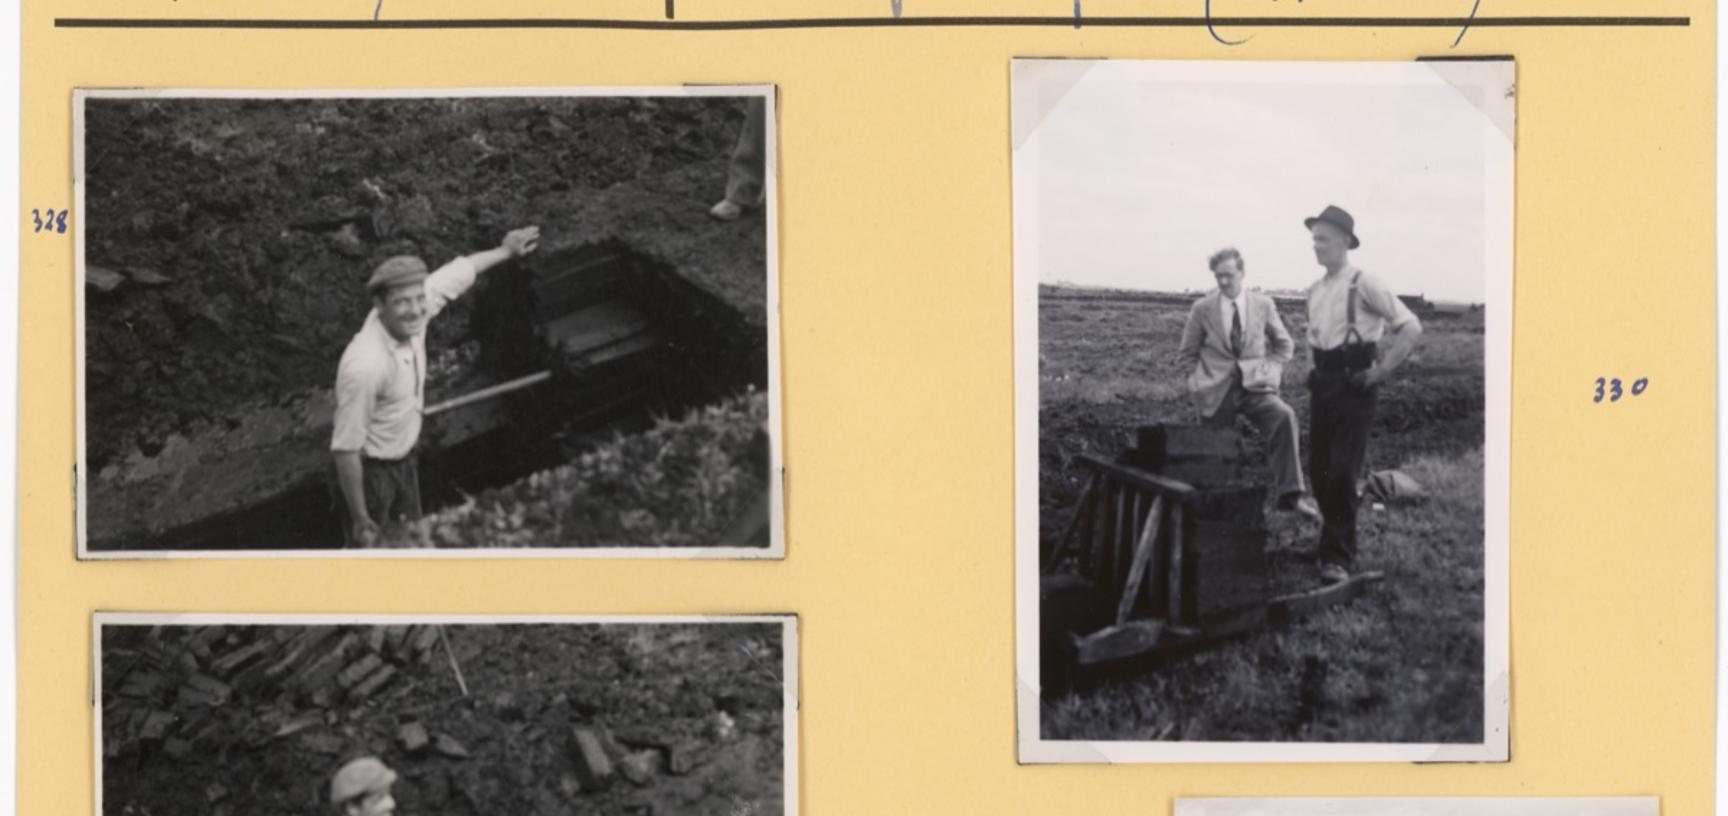 ‘Turf cutting at Ross, Ireland’; ‘Turf – Transport on Aran Isles’ (typed captions). Photographs by Ingegärd Vallin and Ellen Ettlinger. Ireland. 1949.